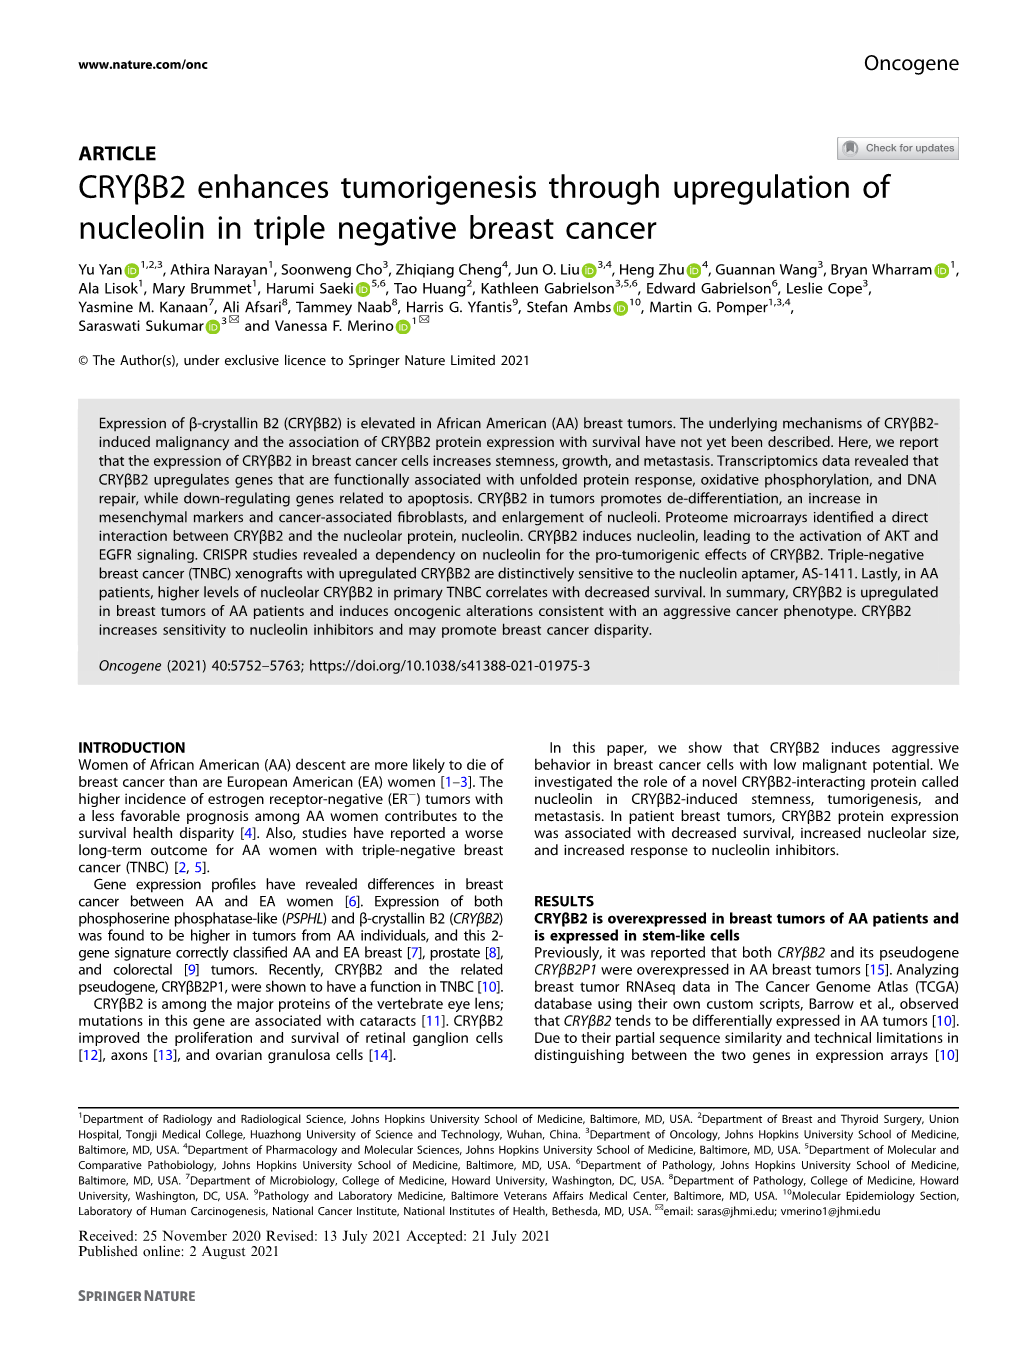 Cryβb2 Enhances Tumorigenesis Through Upregulation of Nucleolin in Triple Negative Breast Cancer